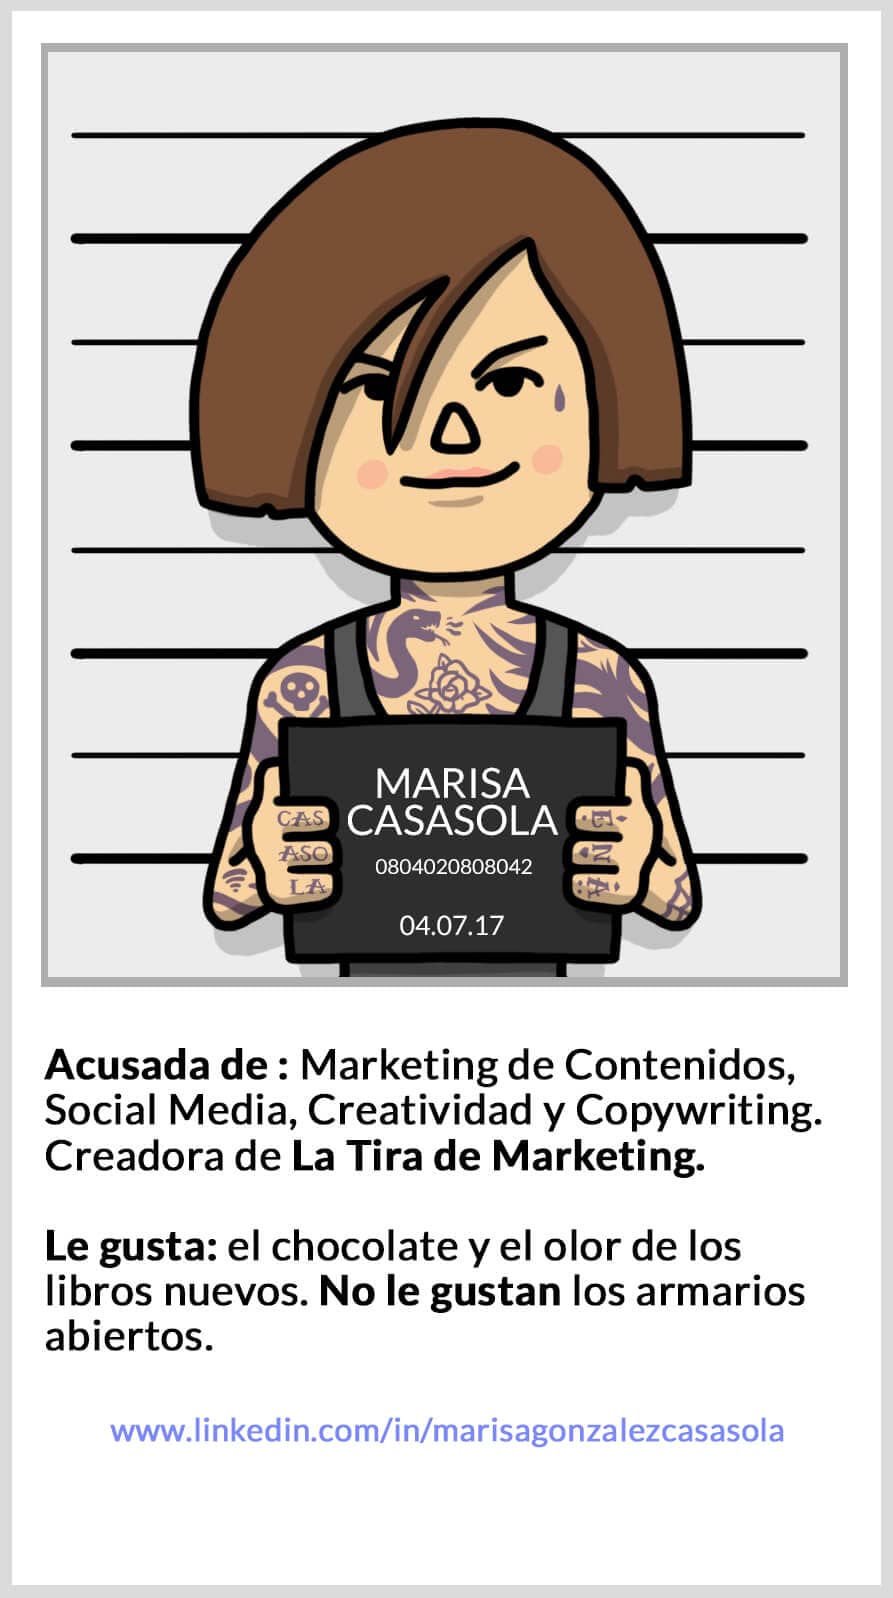 Marisa, Creadora de La Tira de Marketing